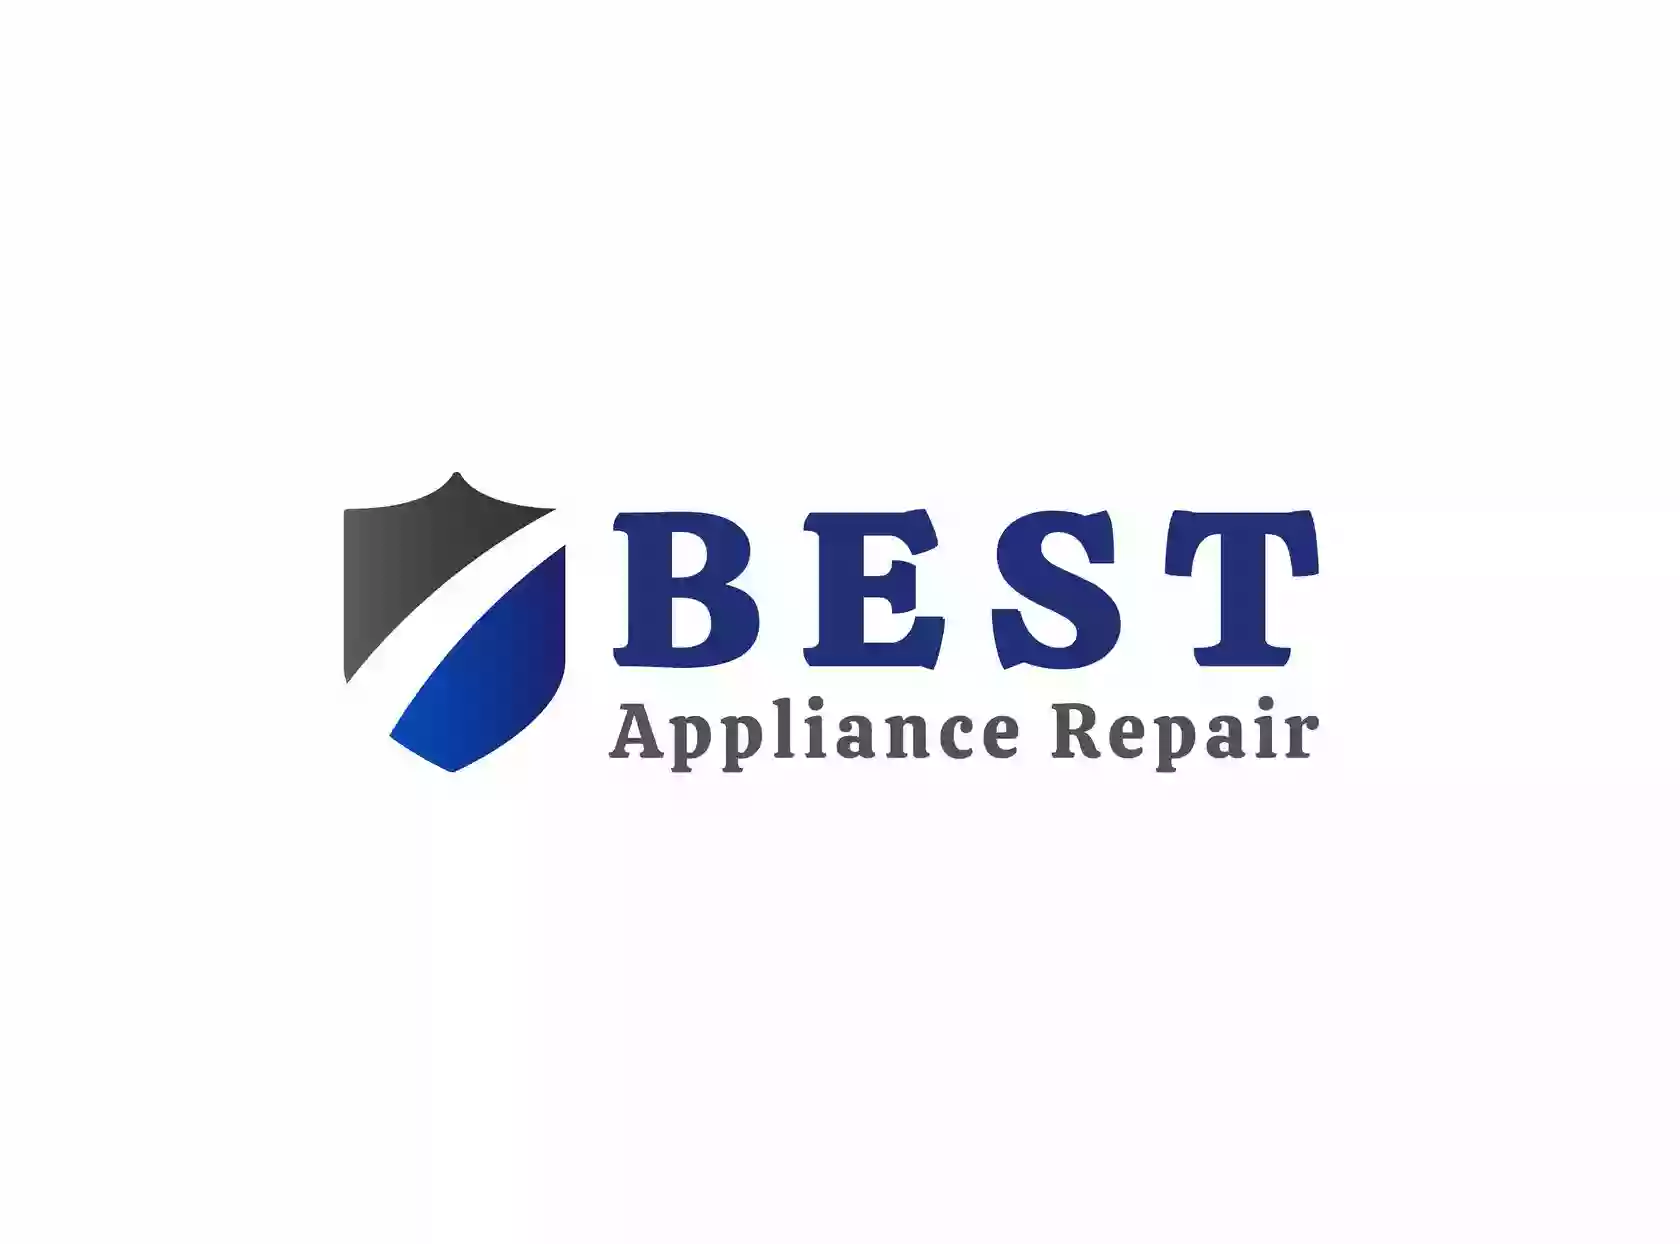 Best Appliance Repair - Philadelphia